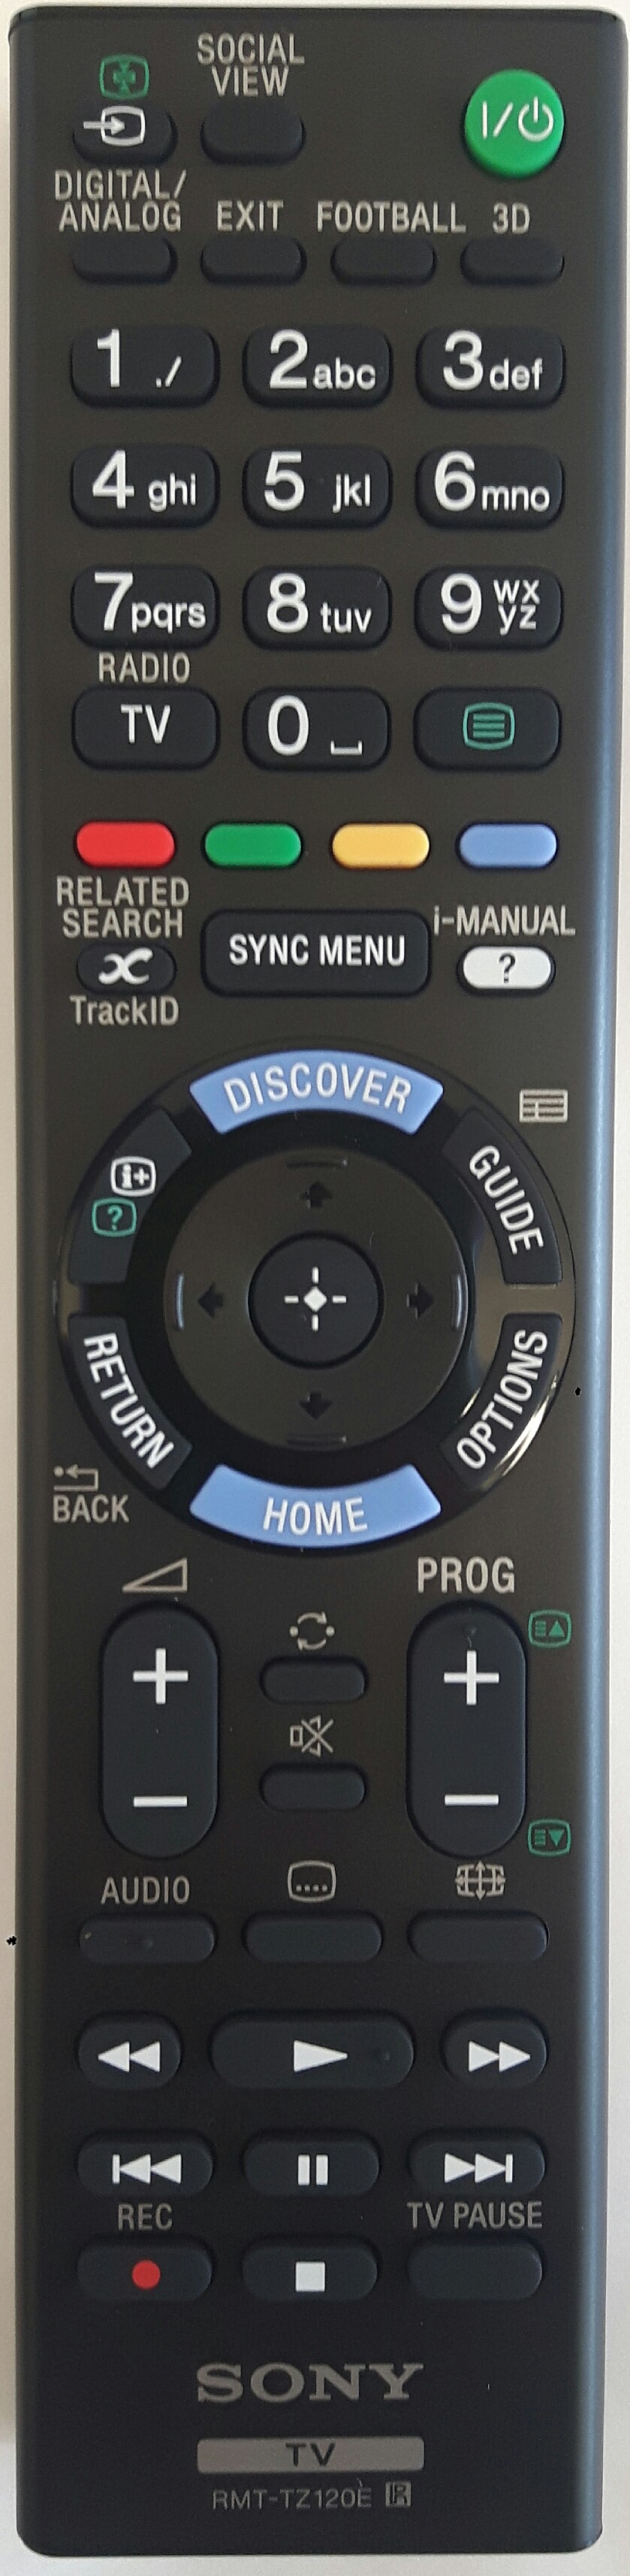 SONY KDL-40R453 Remote Control Original